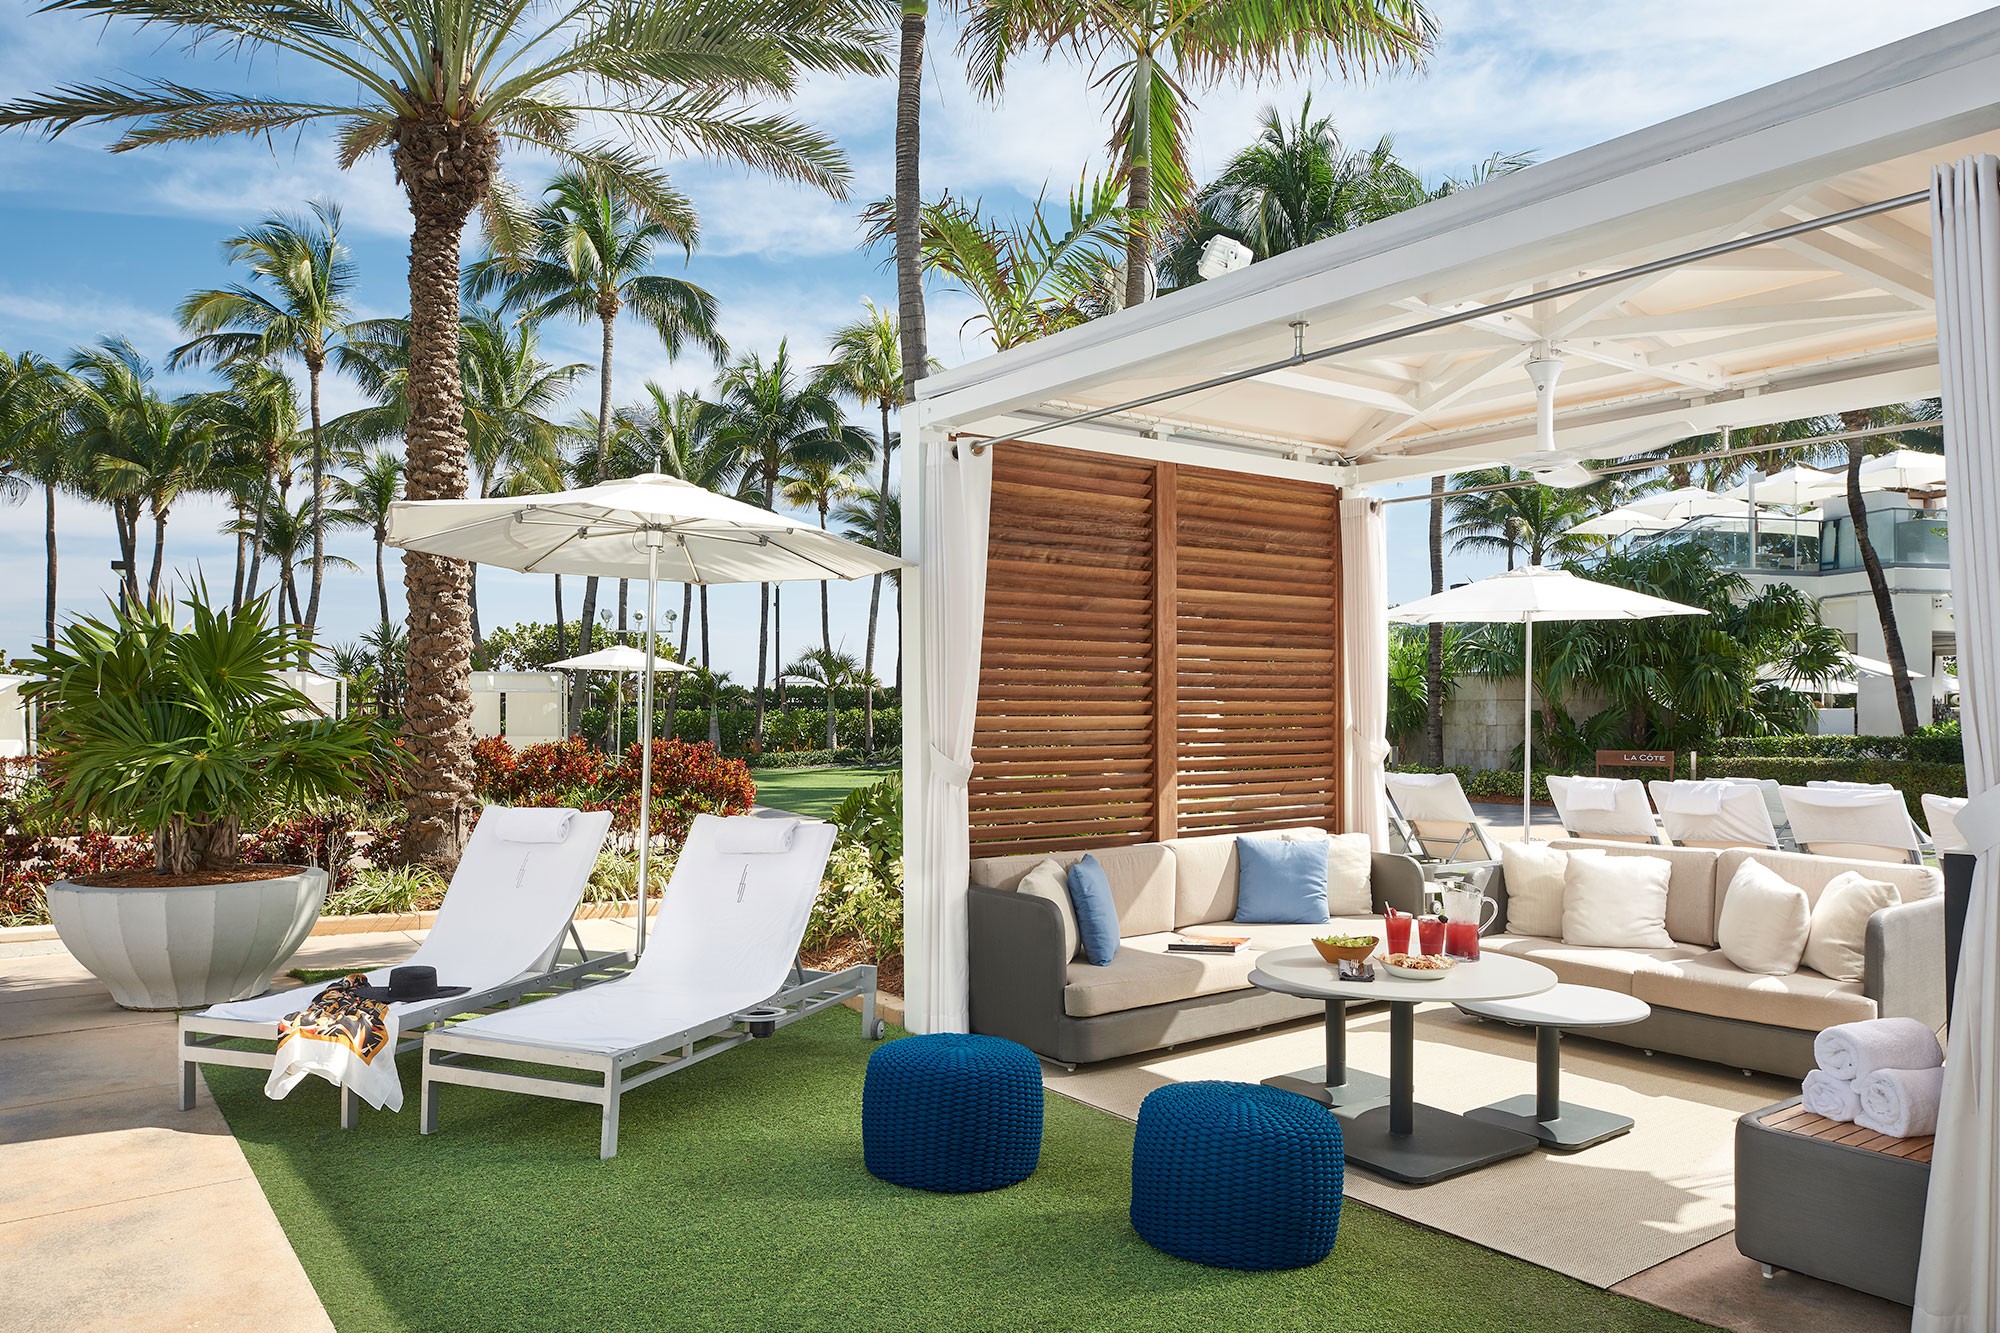 The supreme cabana at the Fontainebleau Miami Beach.